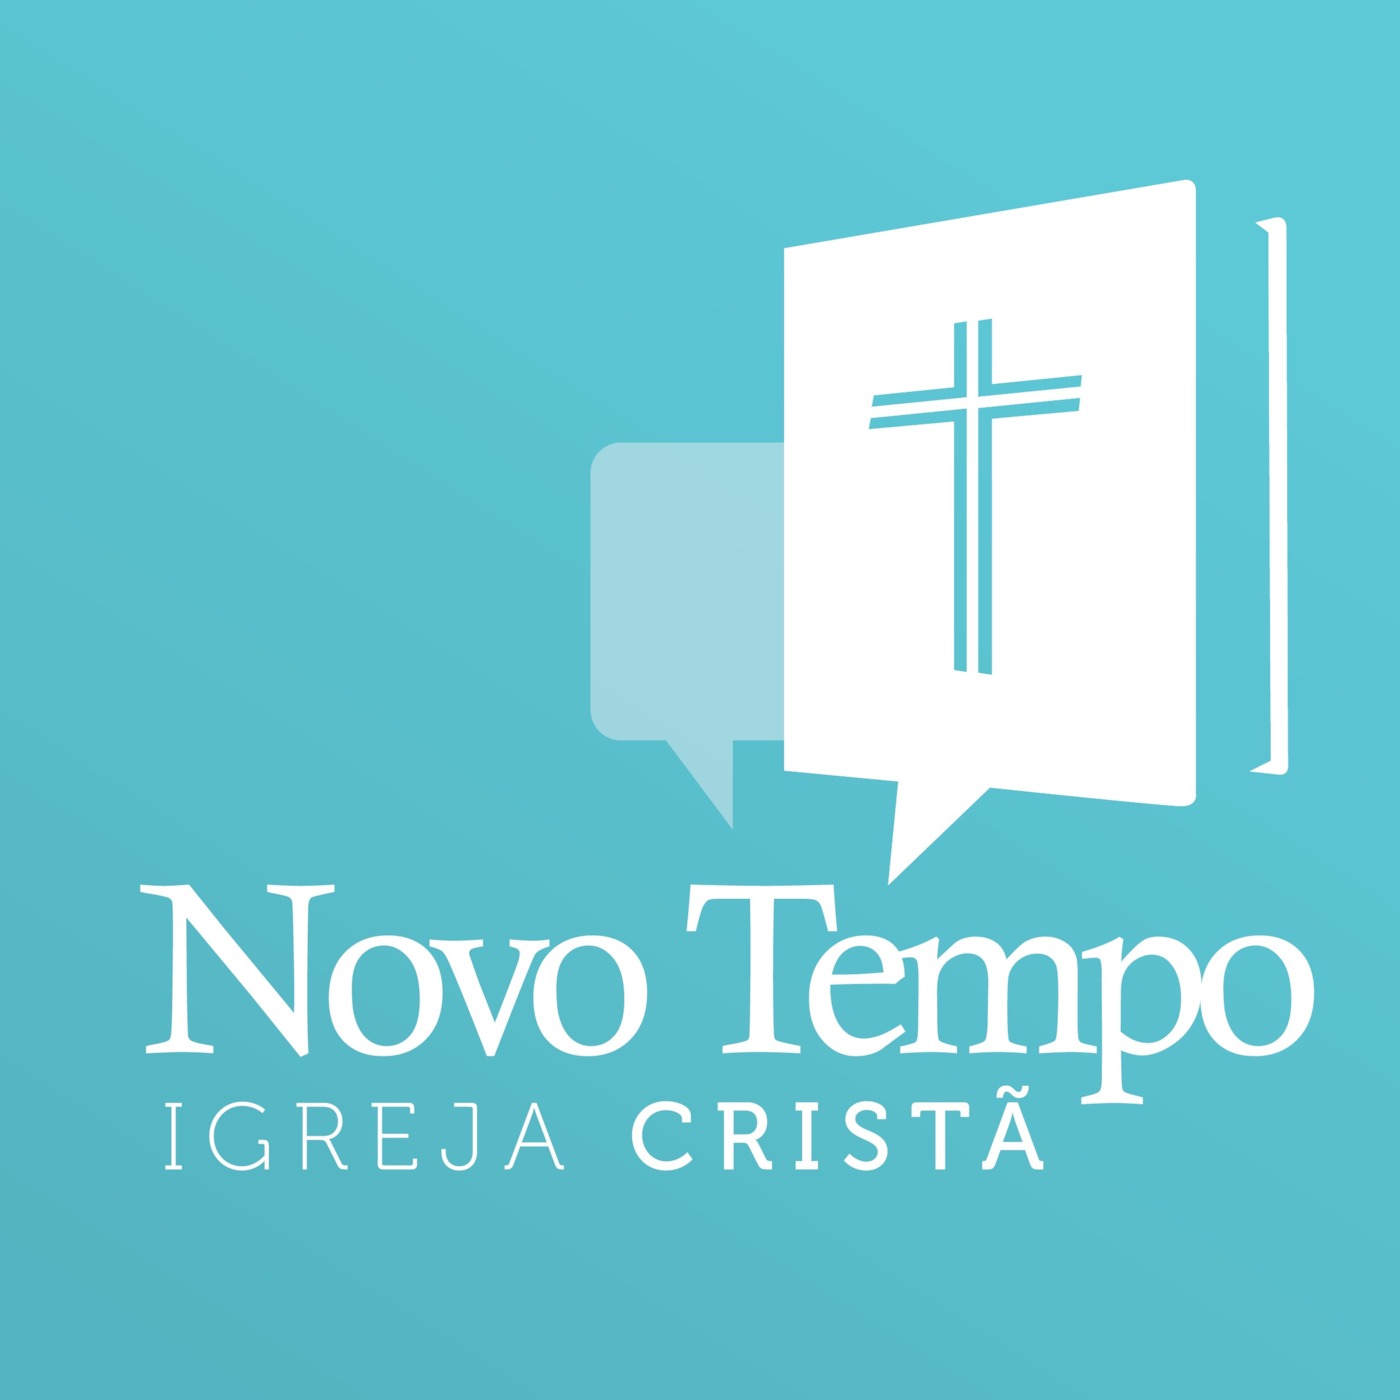 Novo Tempo Igreja Cristã